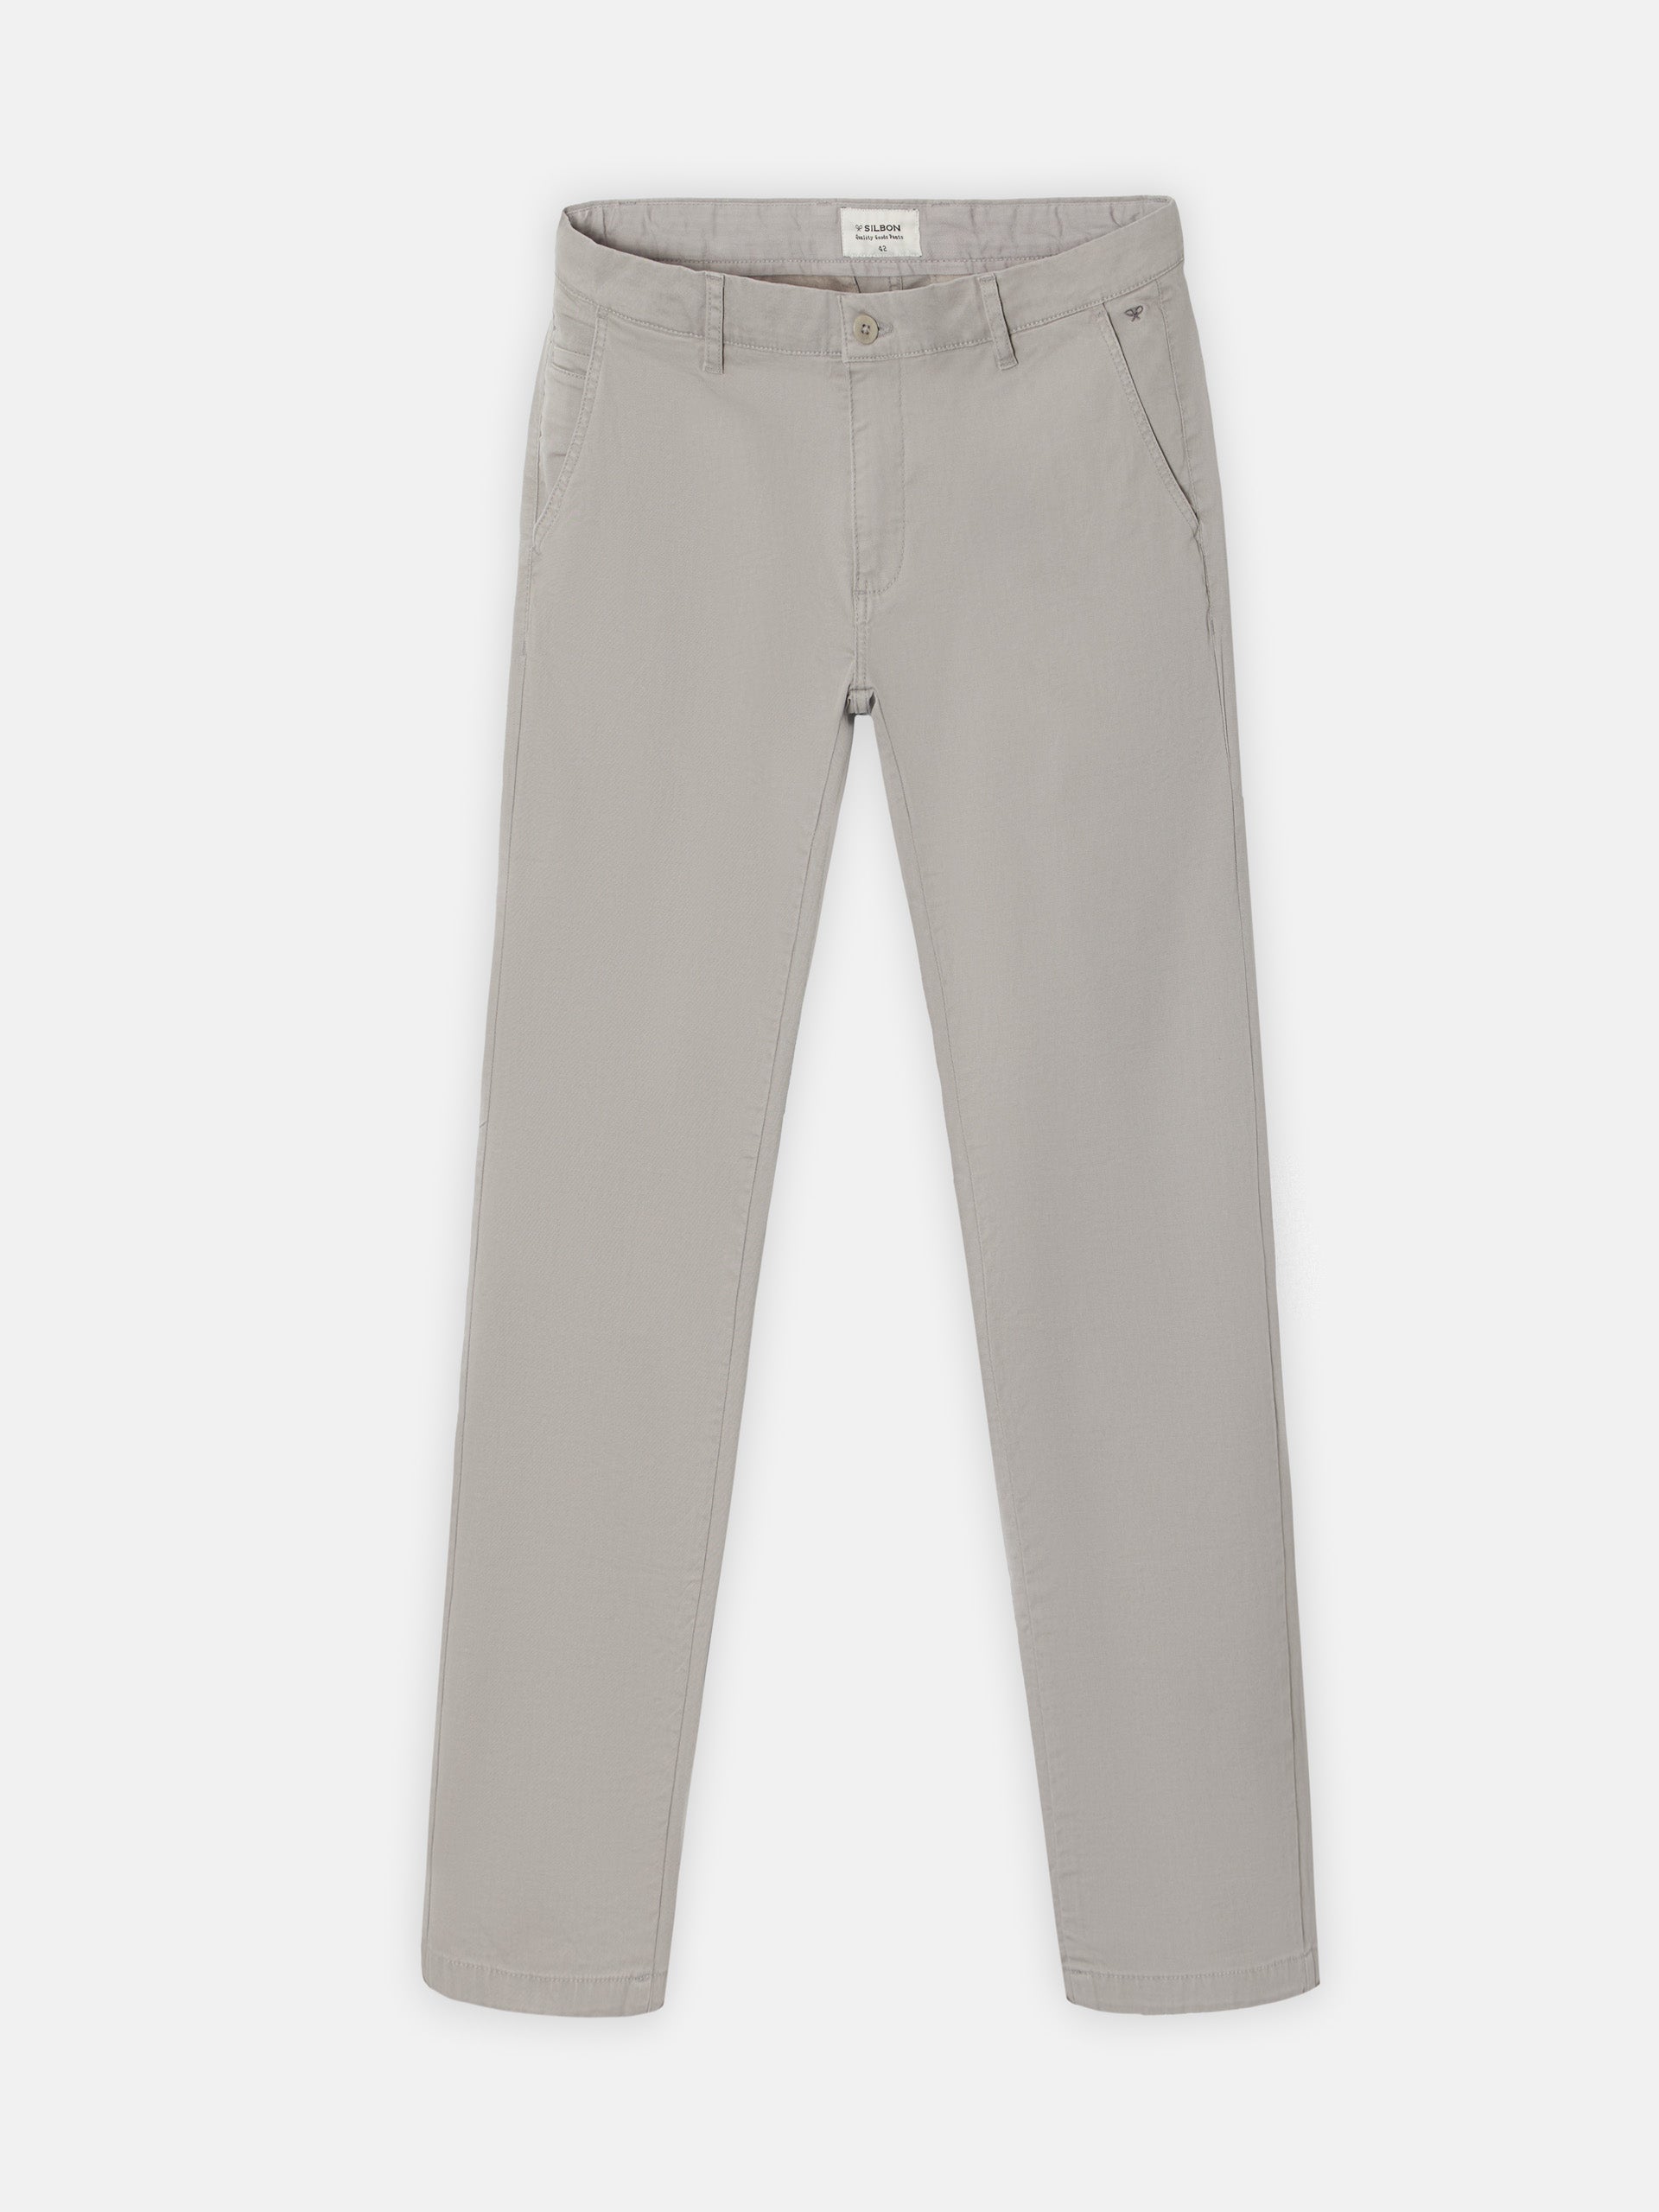 Gray chino sport pants